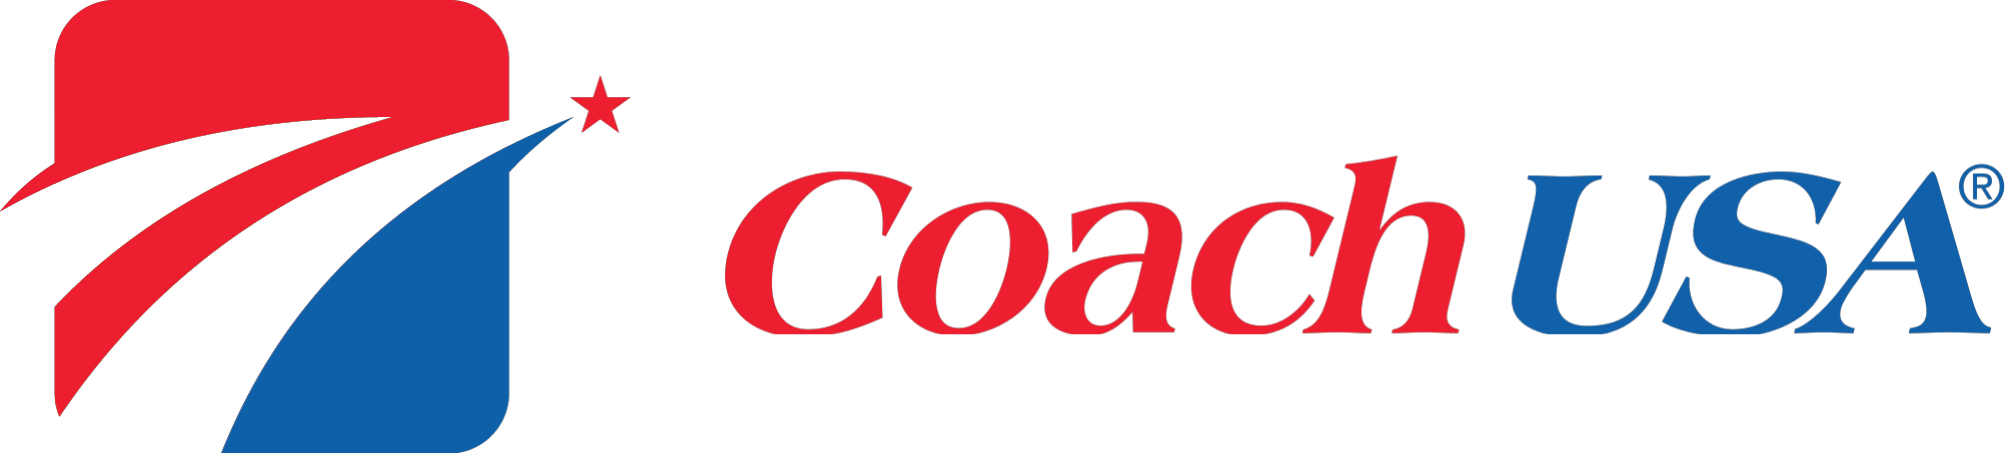 Coach USA Logo - Welcome to Coach USA